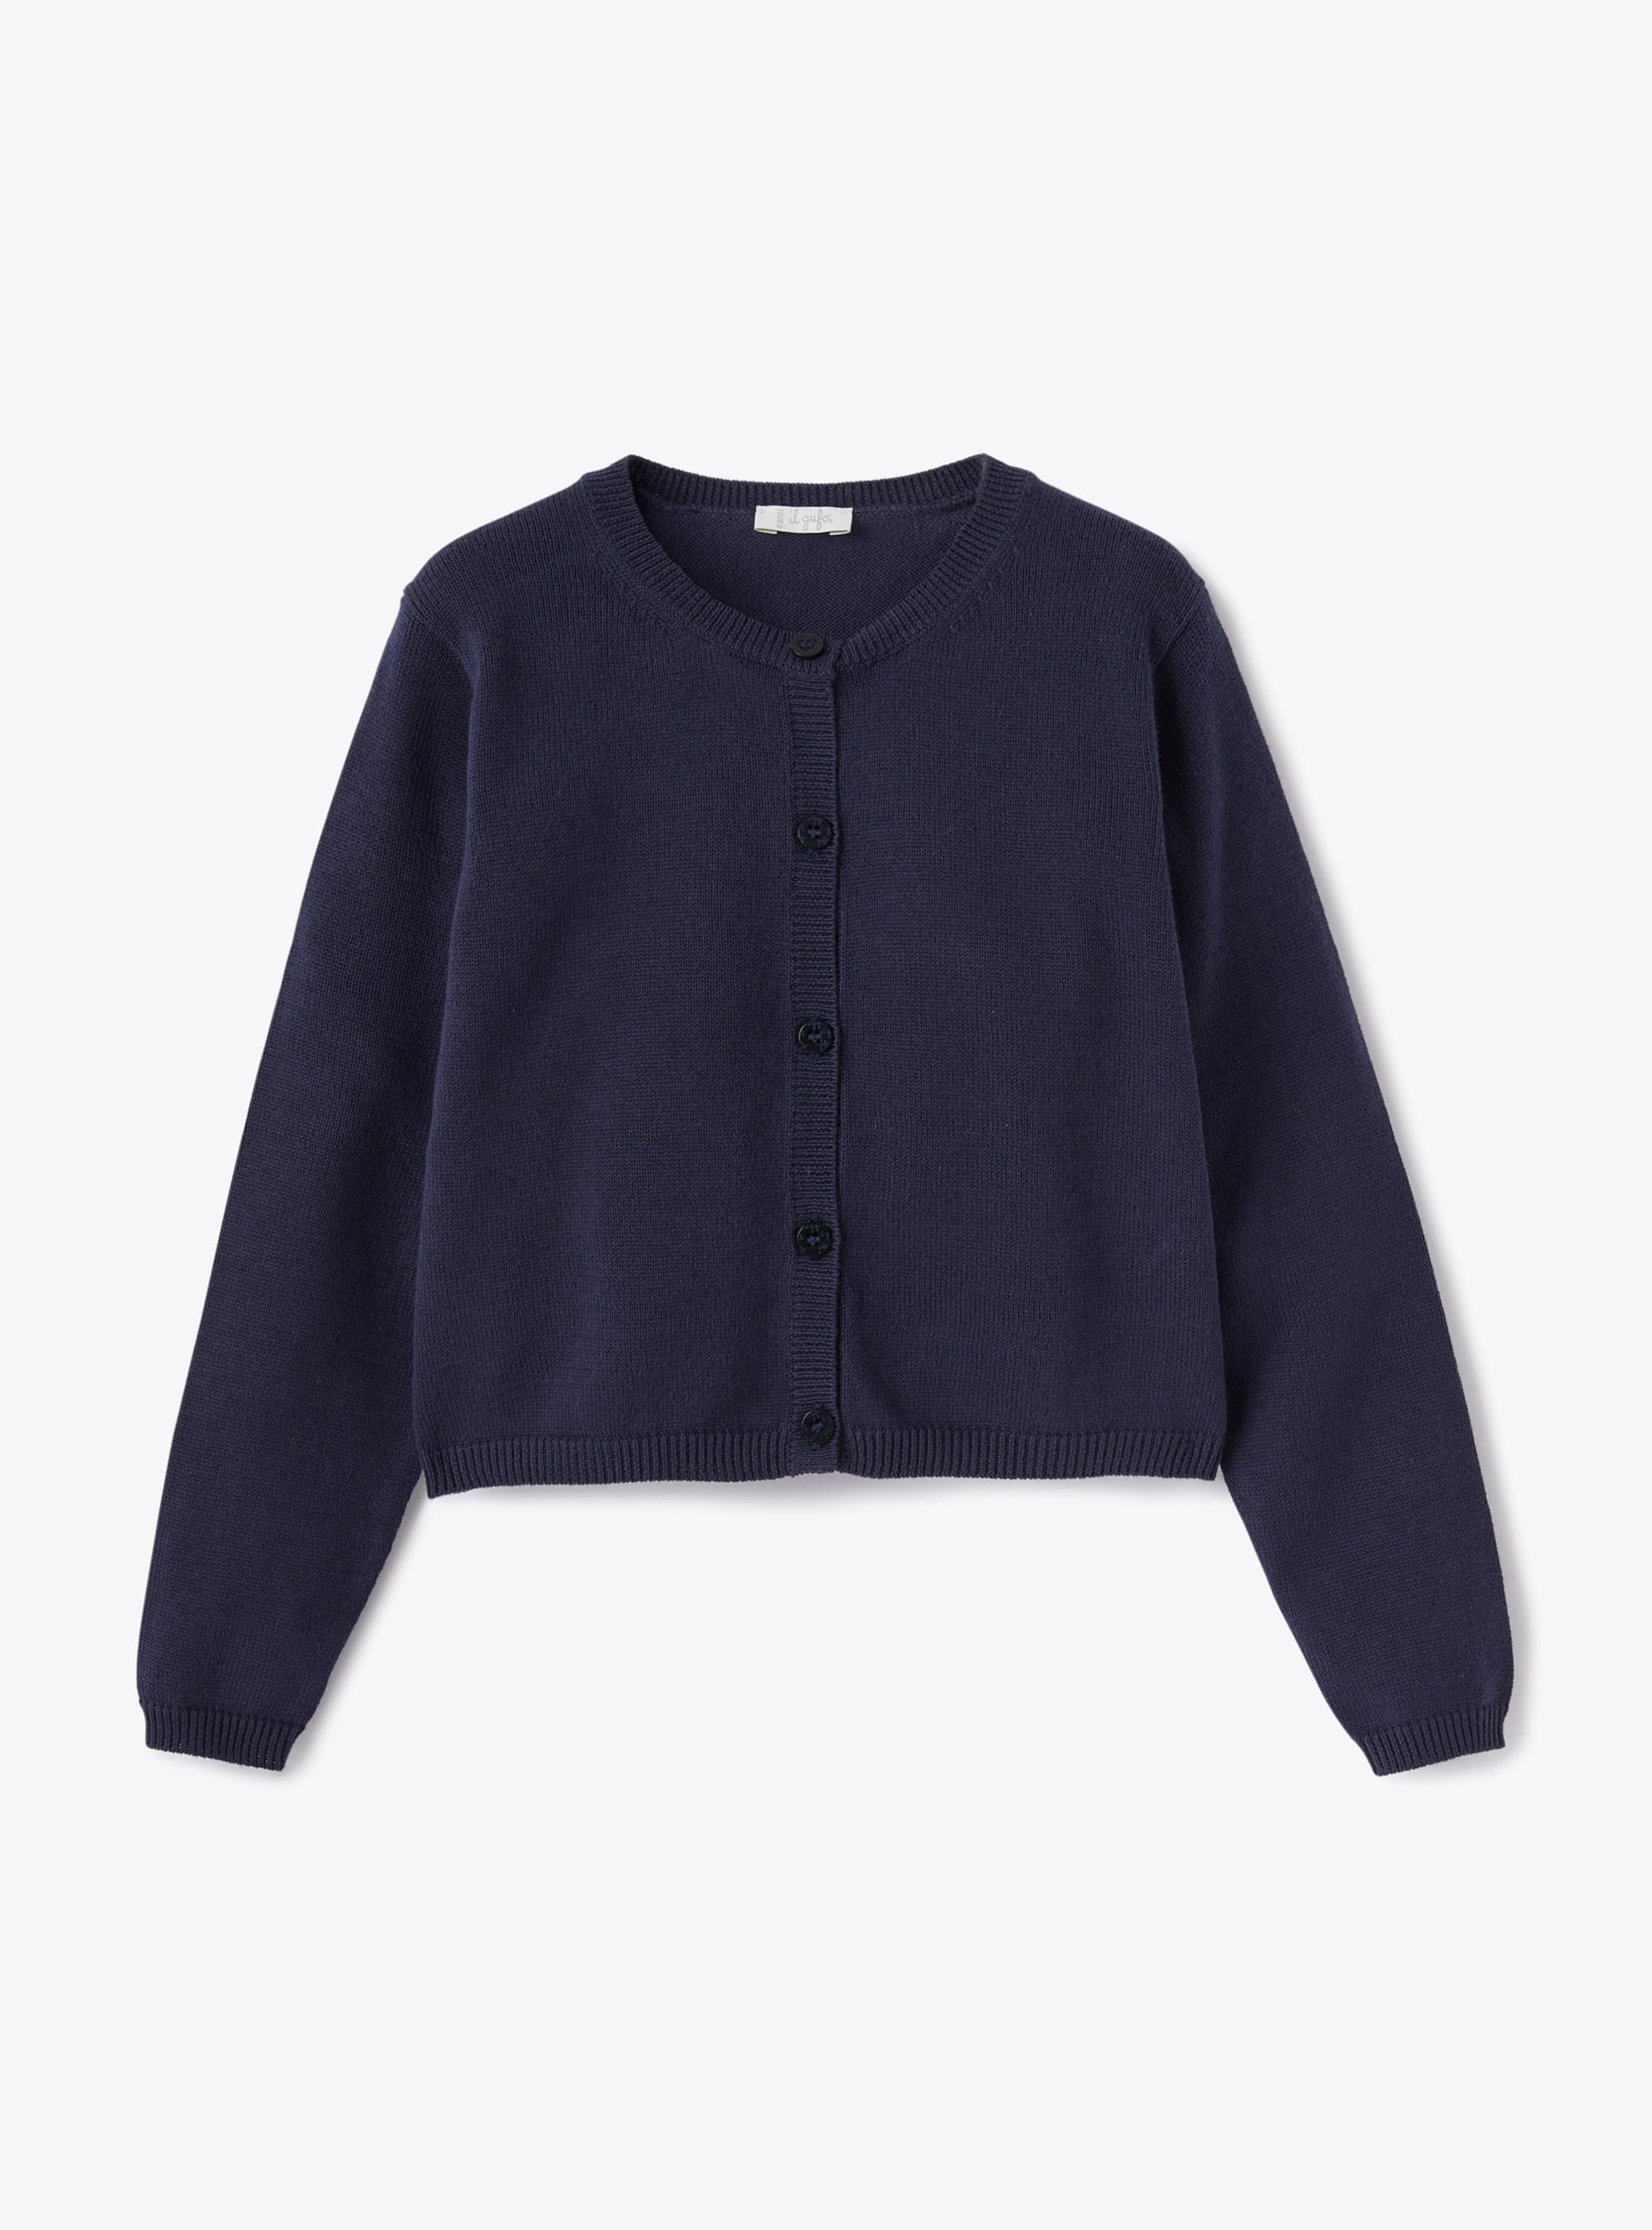 Cardigan in blue organic cotton - Sweaters - Il Gufo